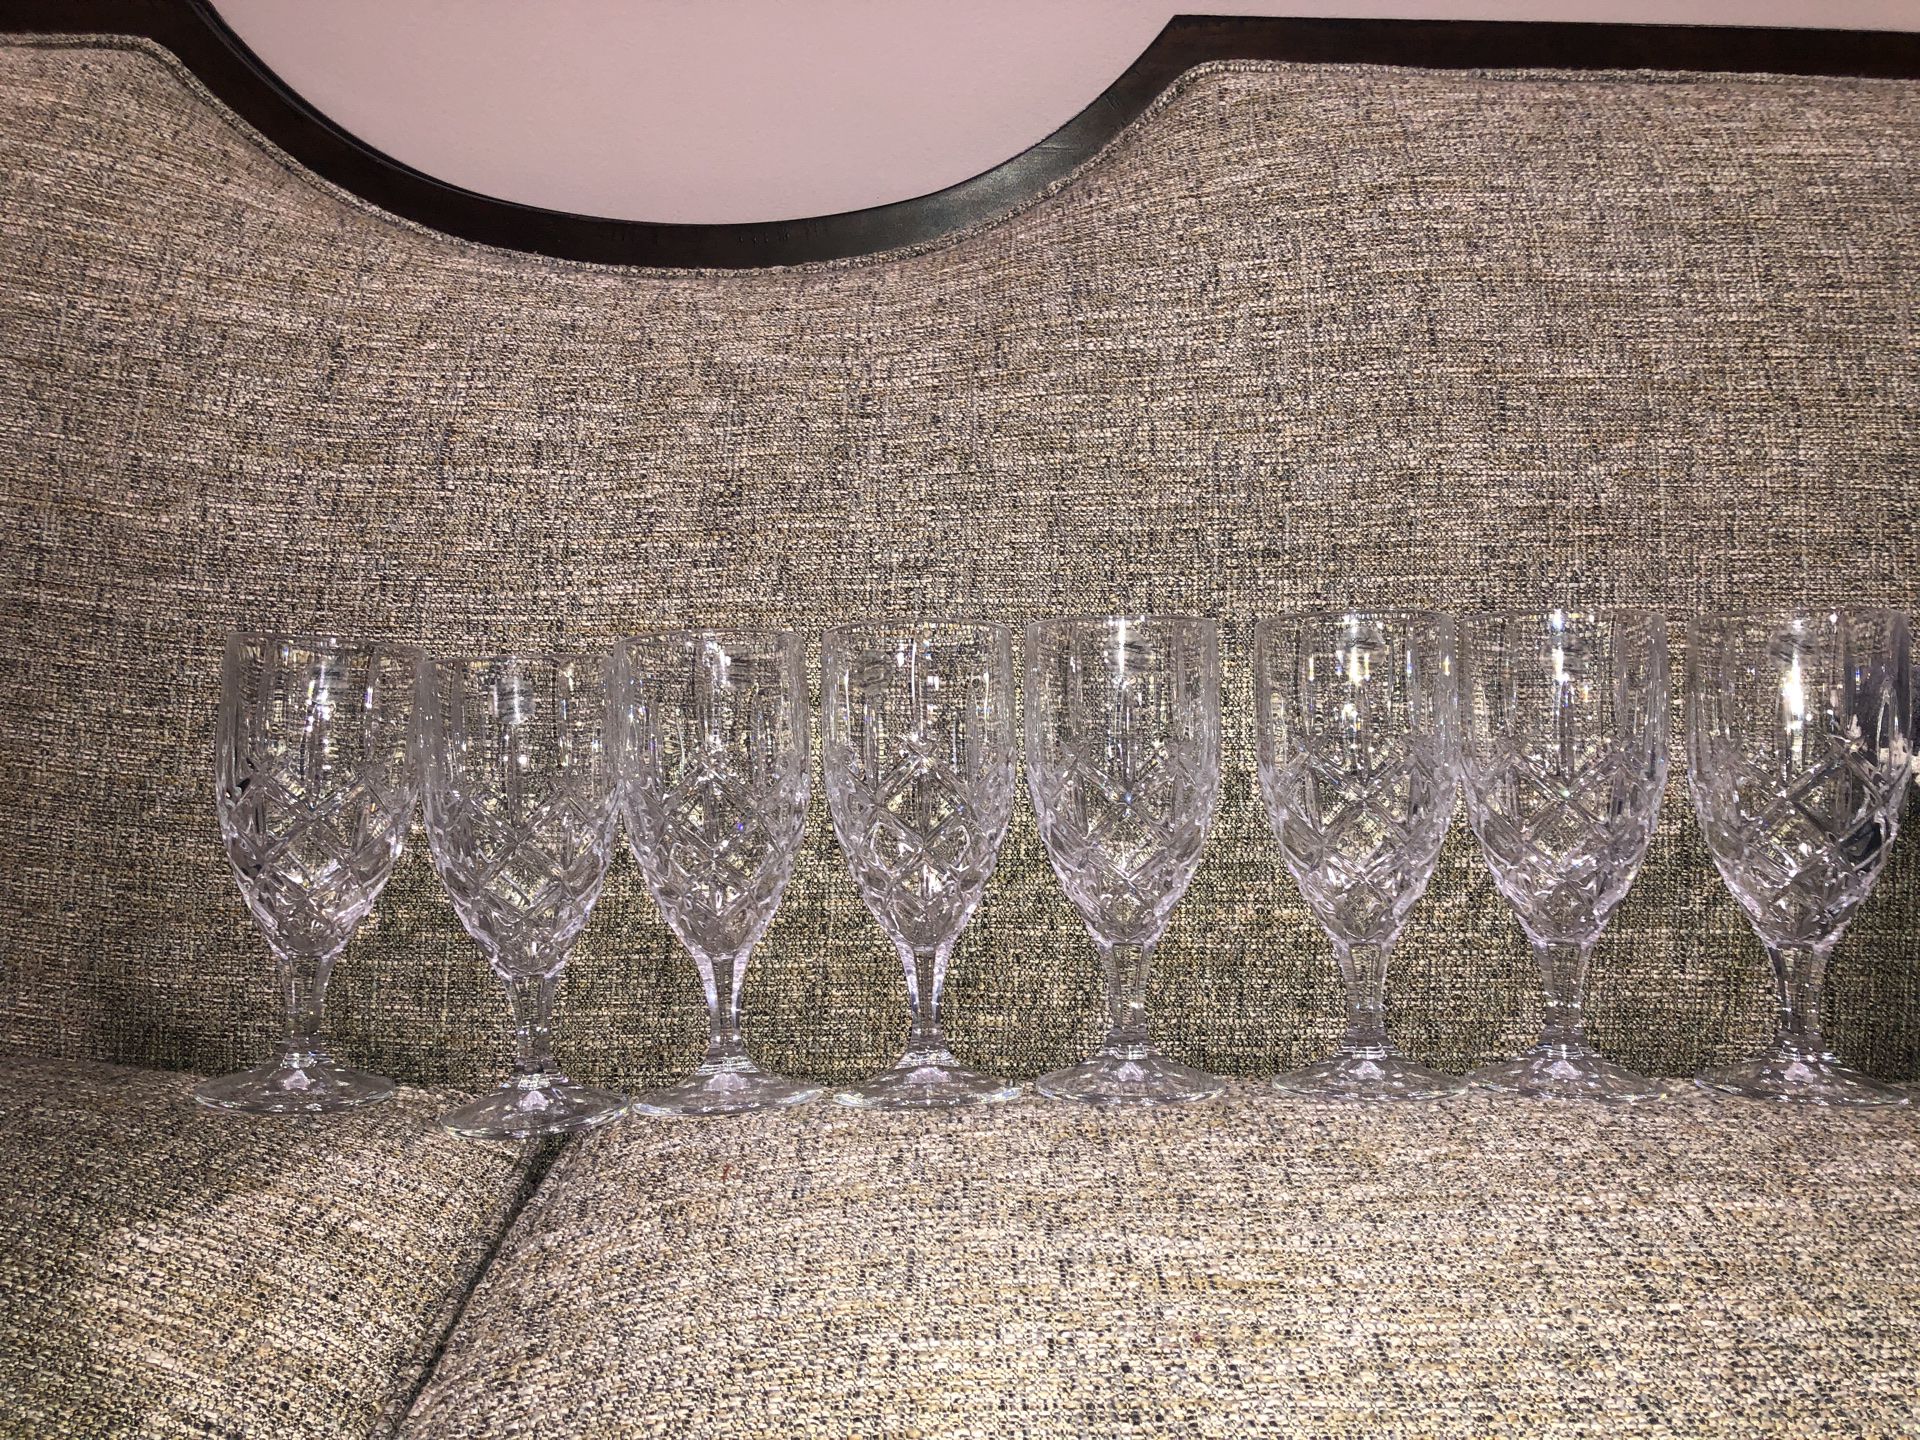 Gorham Set of 8 Glass